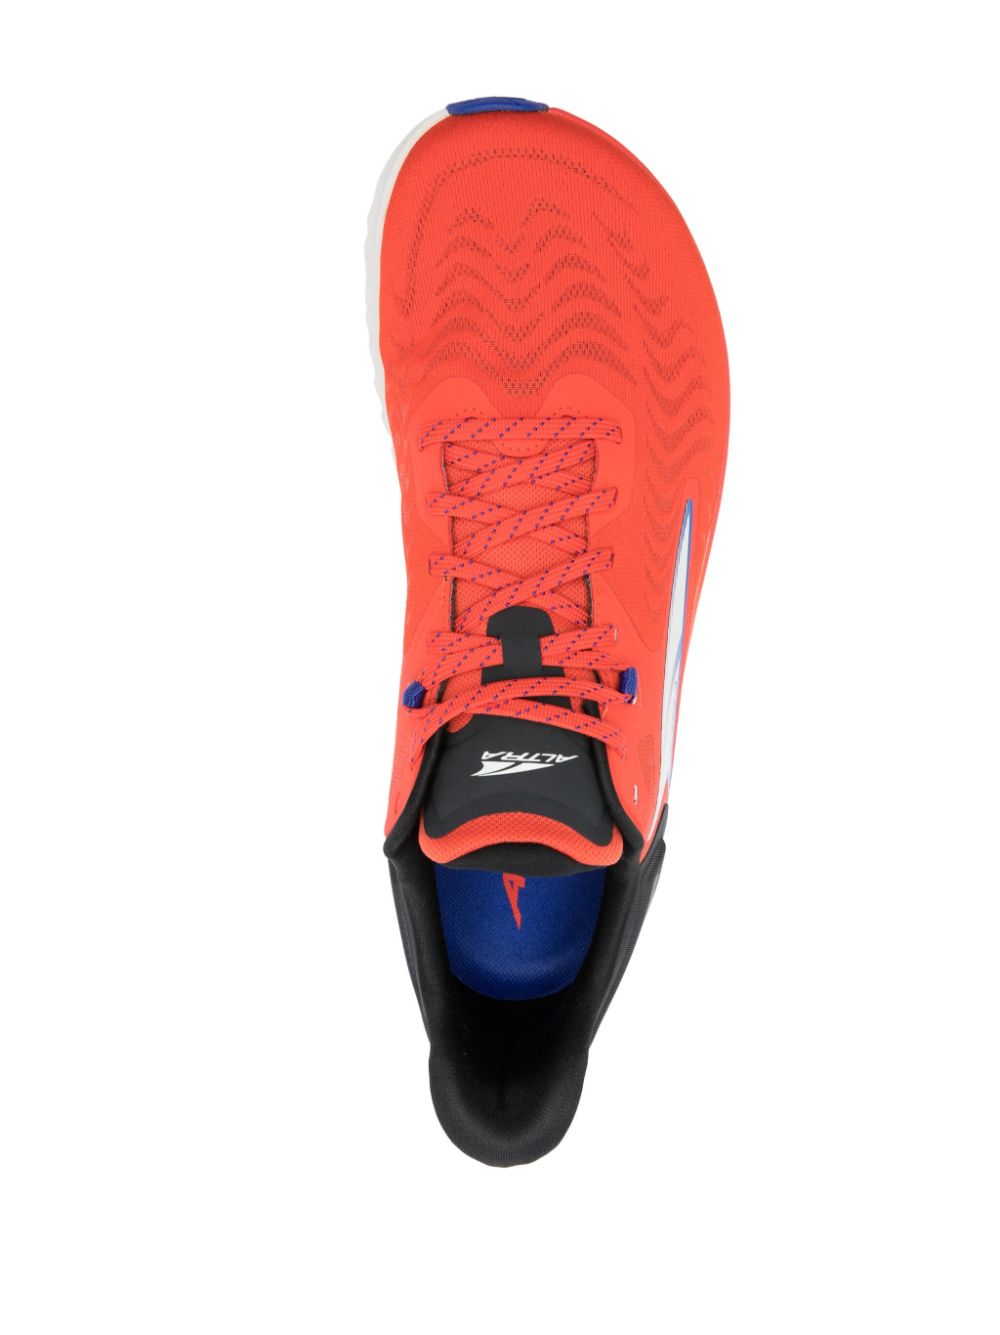 Blak/blue/orange Torin 7 sneakers